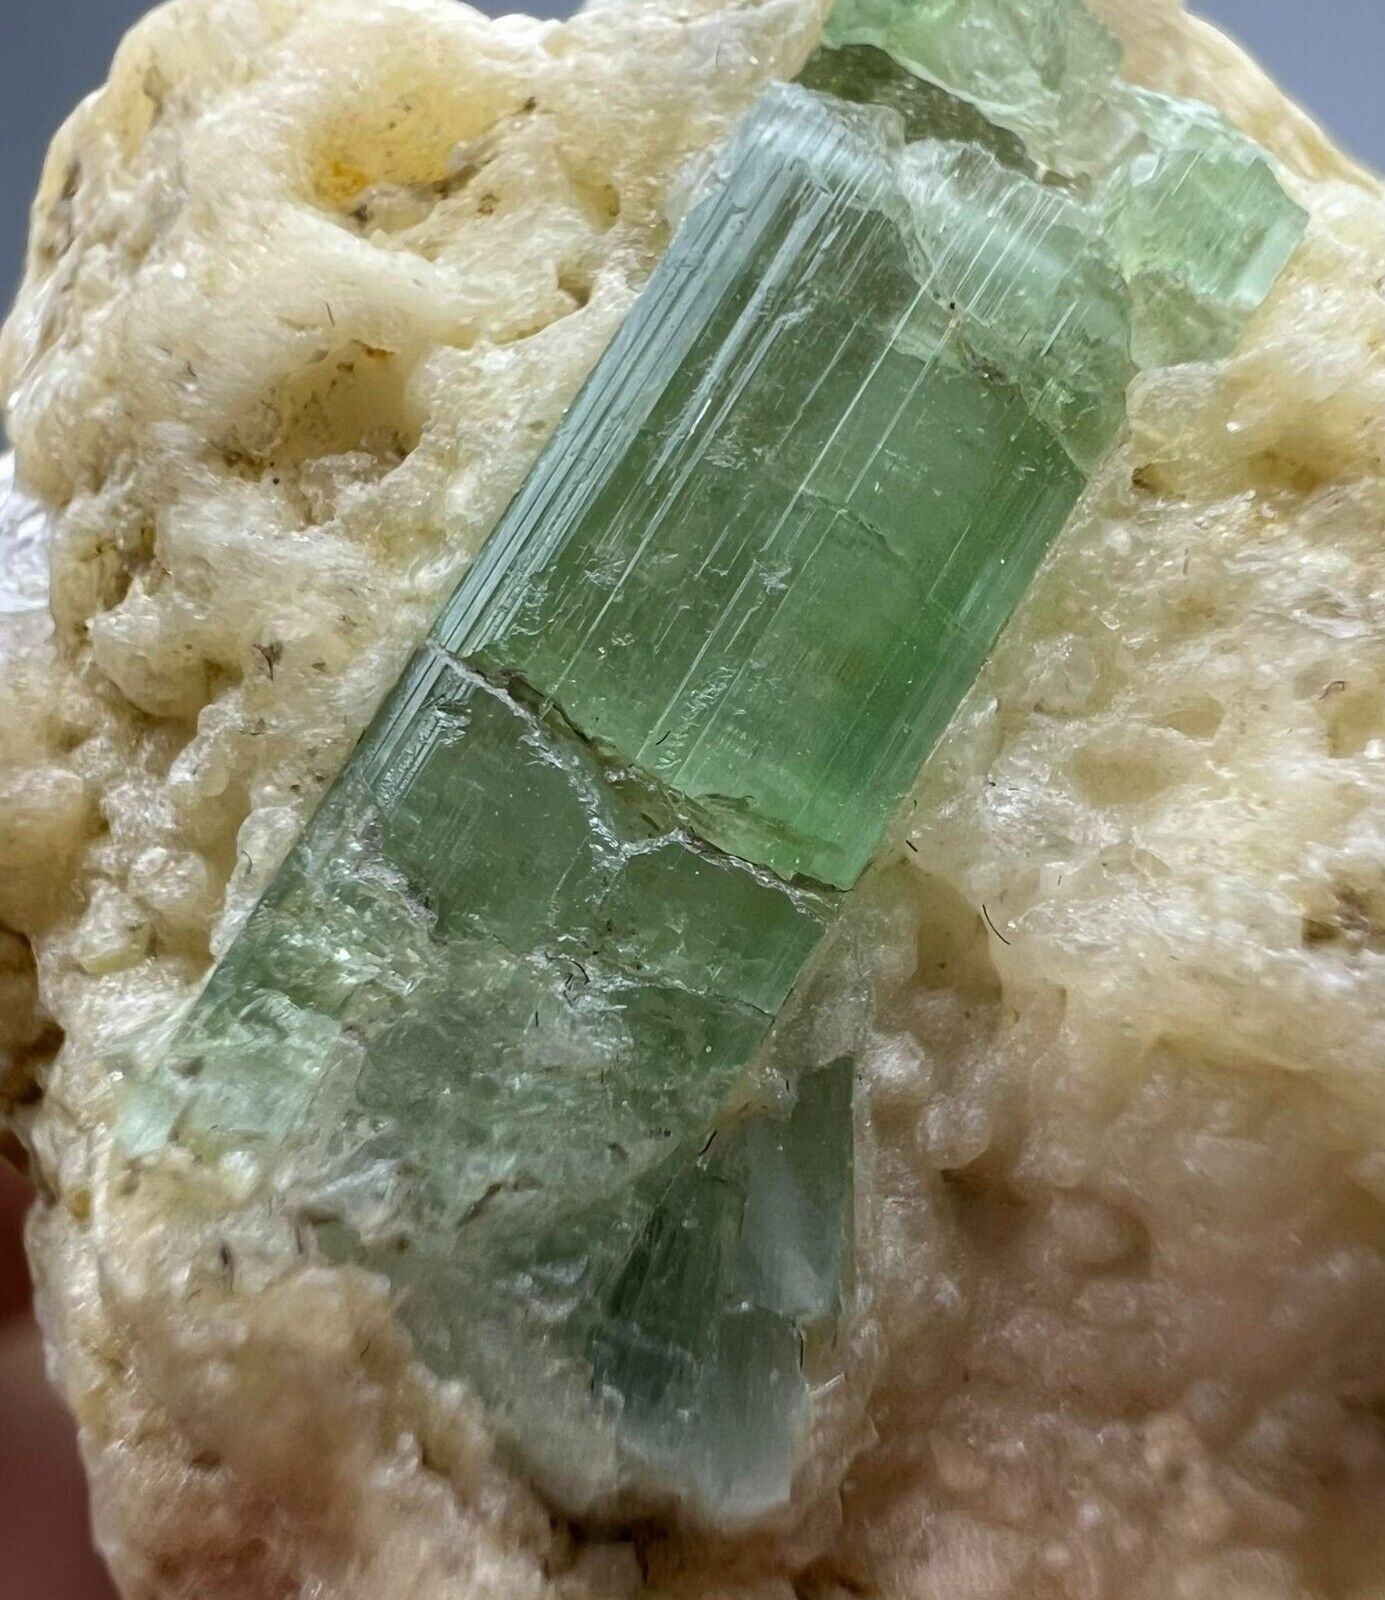 94 CT. Very Beautiful Green Tourmaline Crystal On Matrix From Kunar AFG